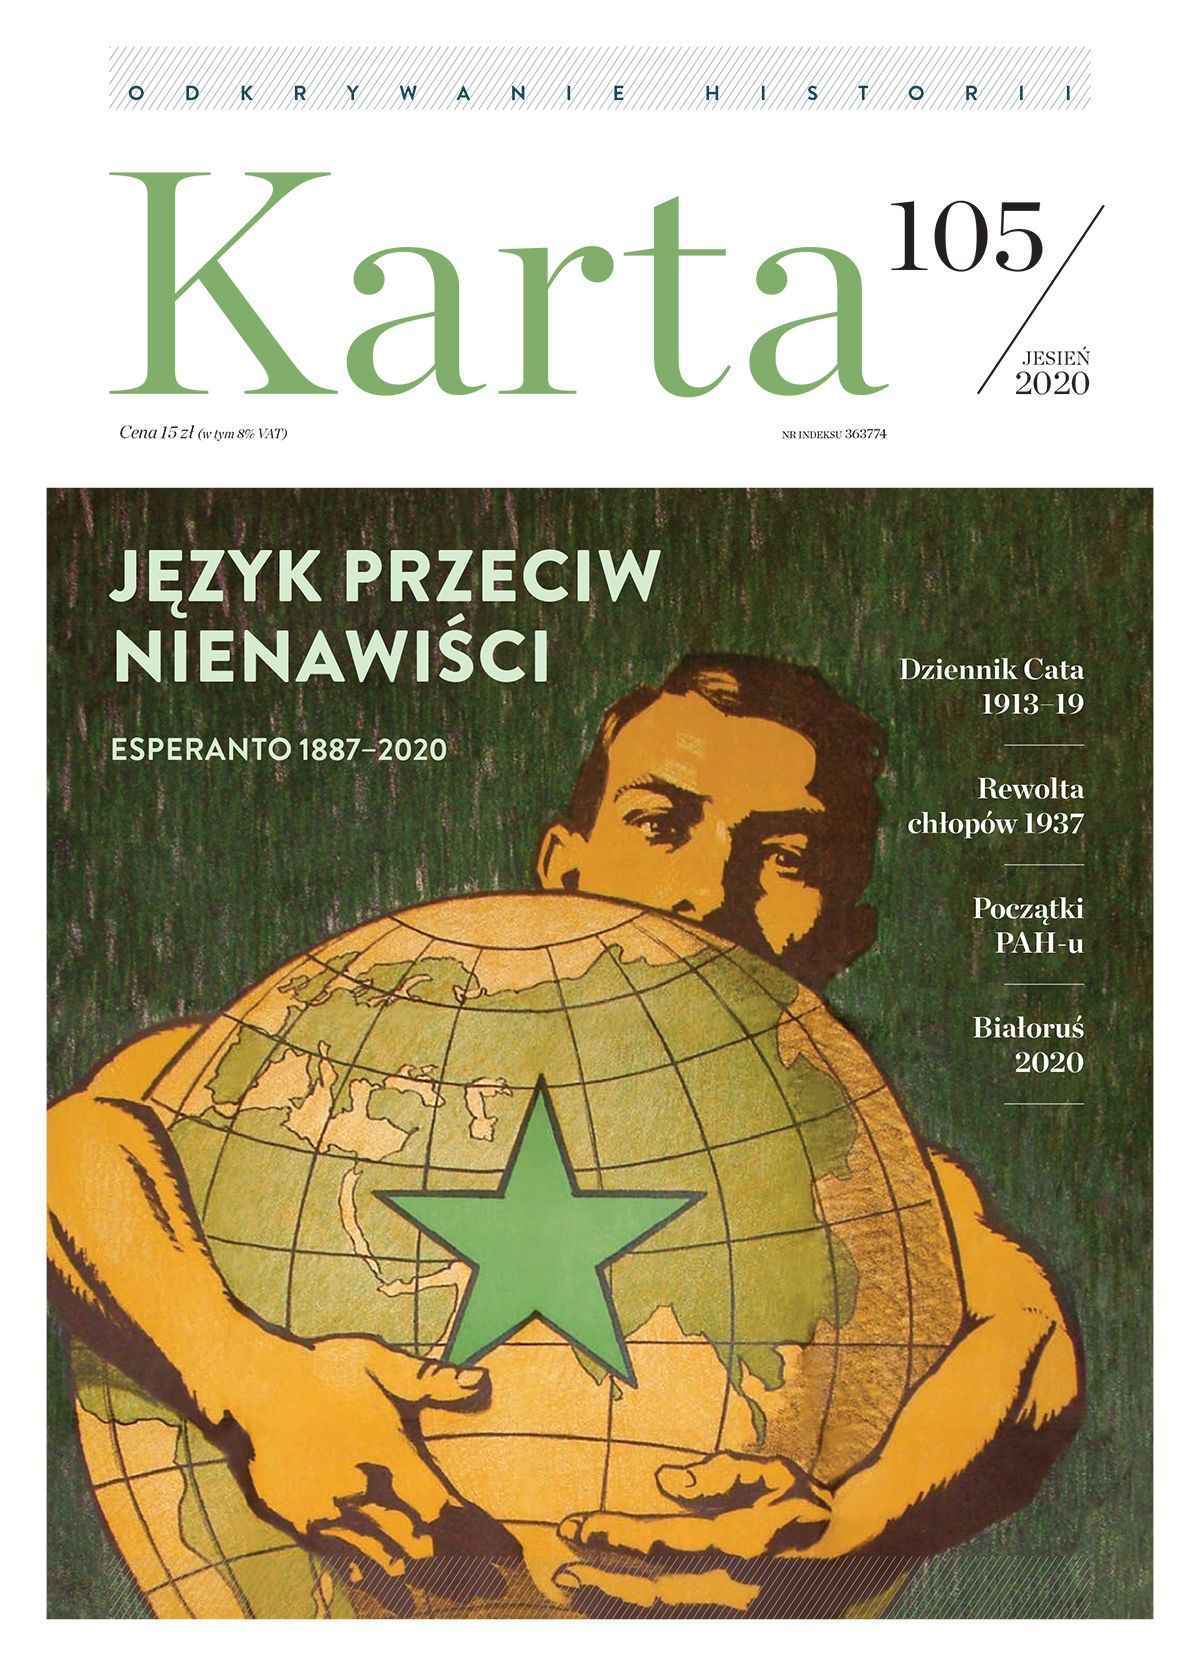 KARTA magazine no. 105/2020